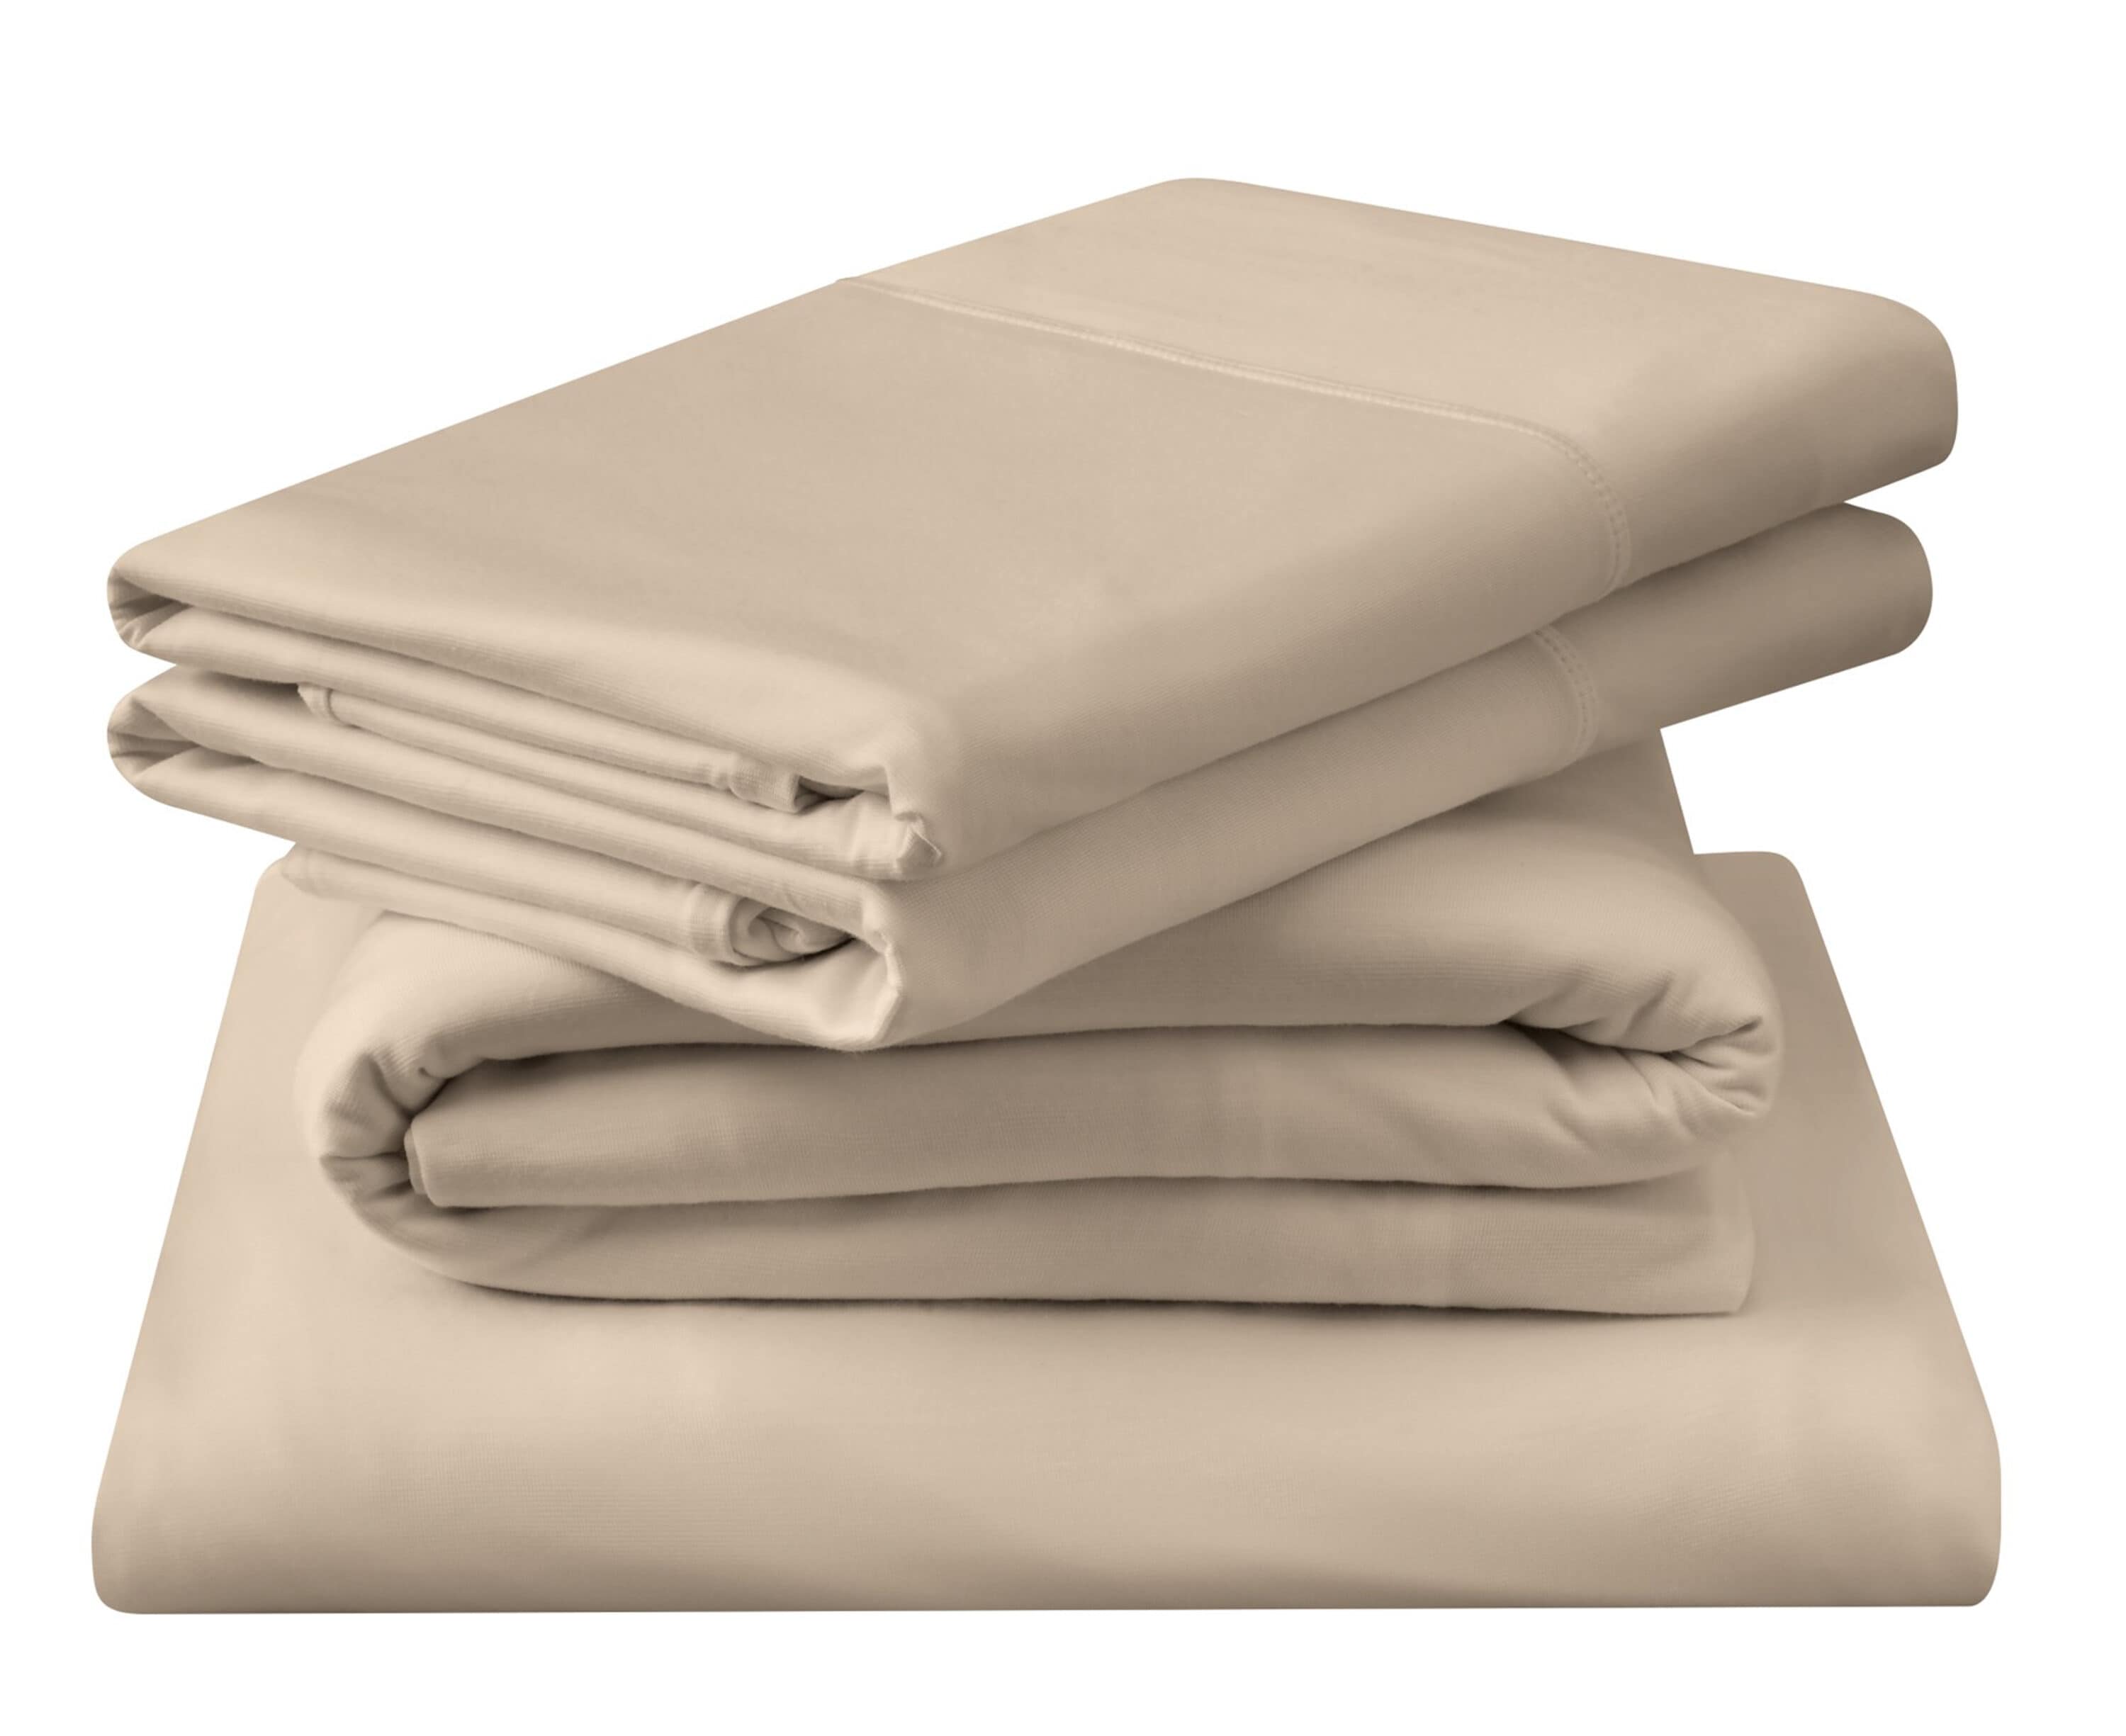 Cotton Sauna Bath Towel Sheet for Family, Set of 4, Beige